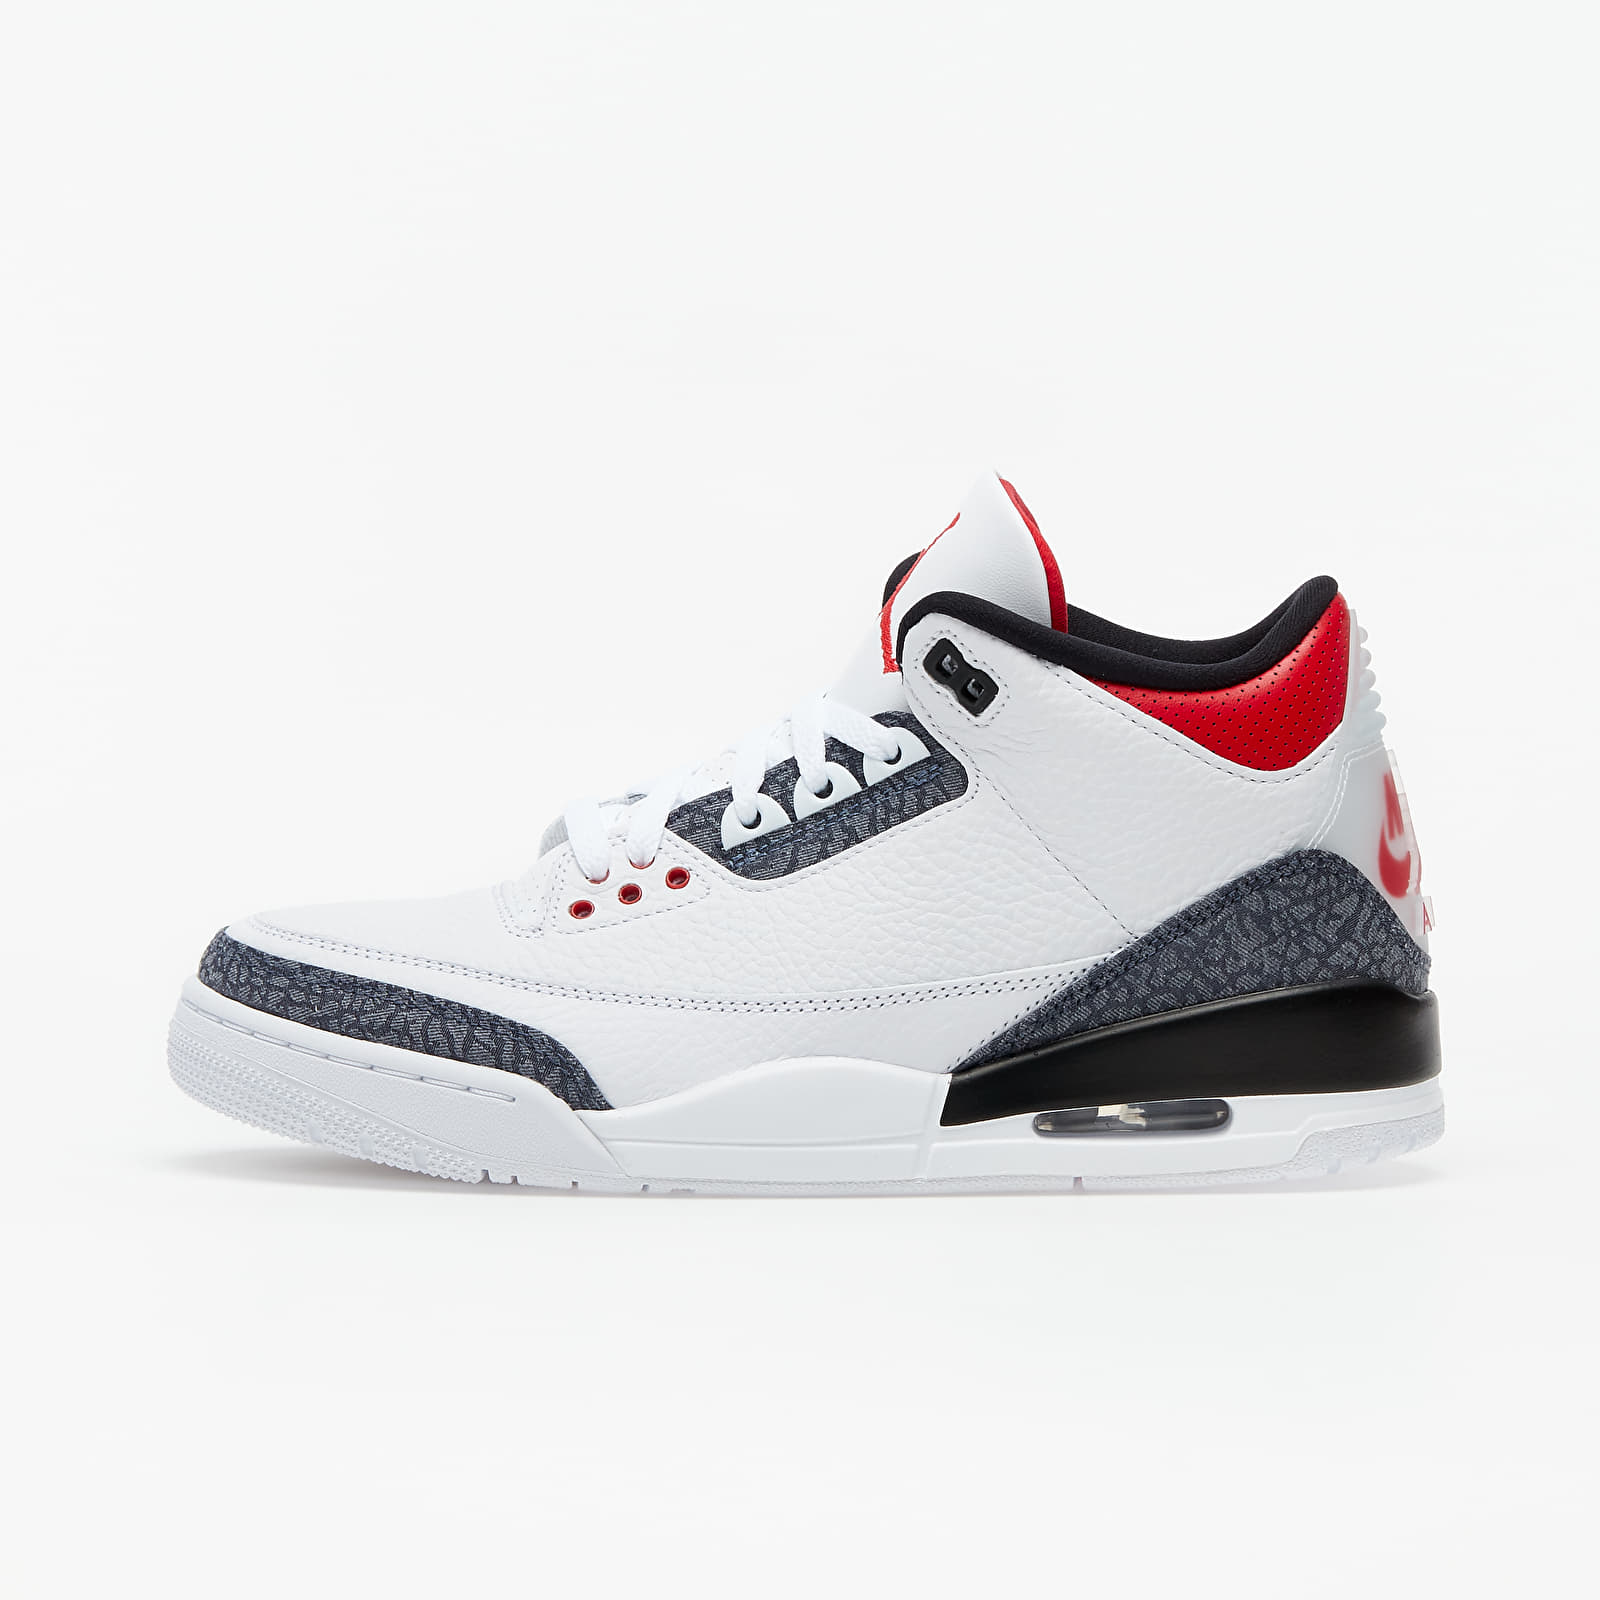 Men's shoes Air Jordan 3 Retro SE White/ Fire Red-Black